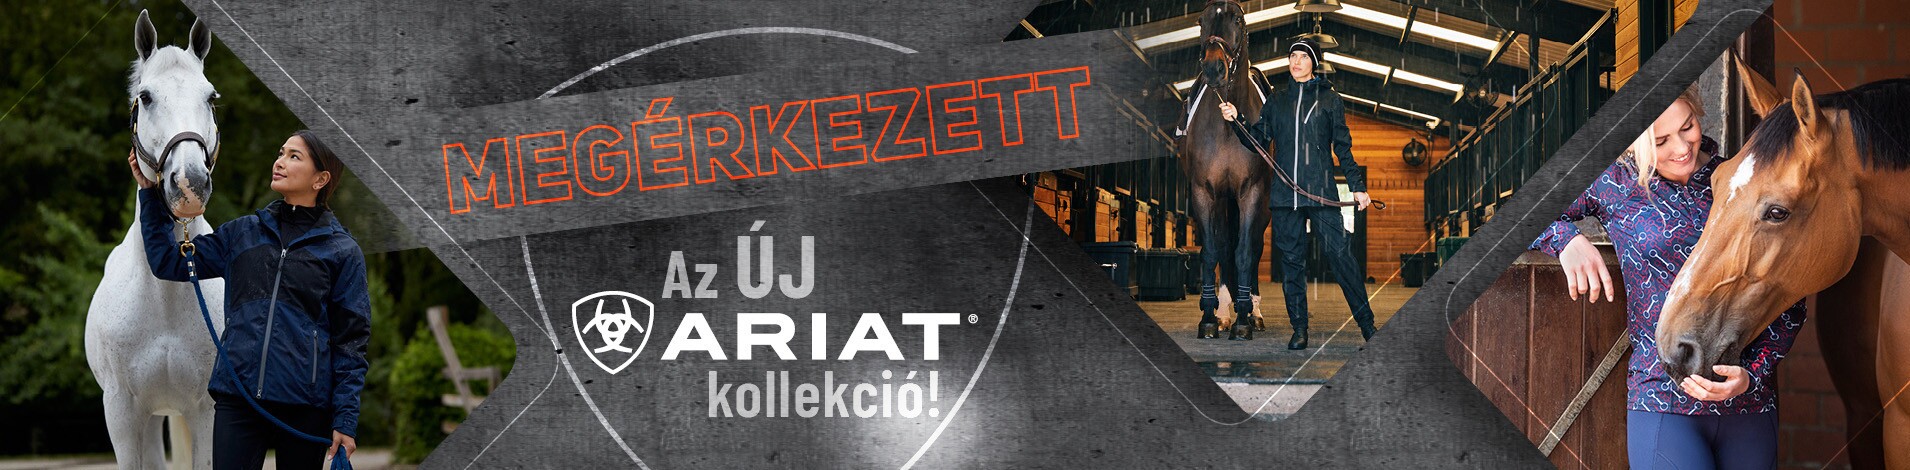 ariat-uj-kollekcio